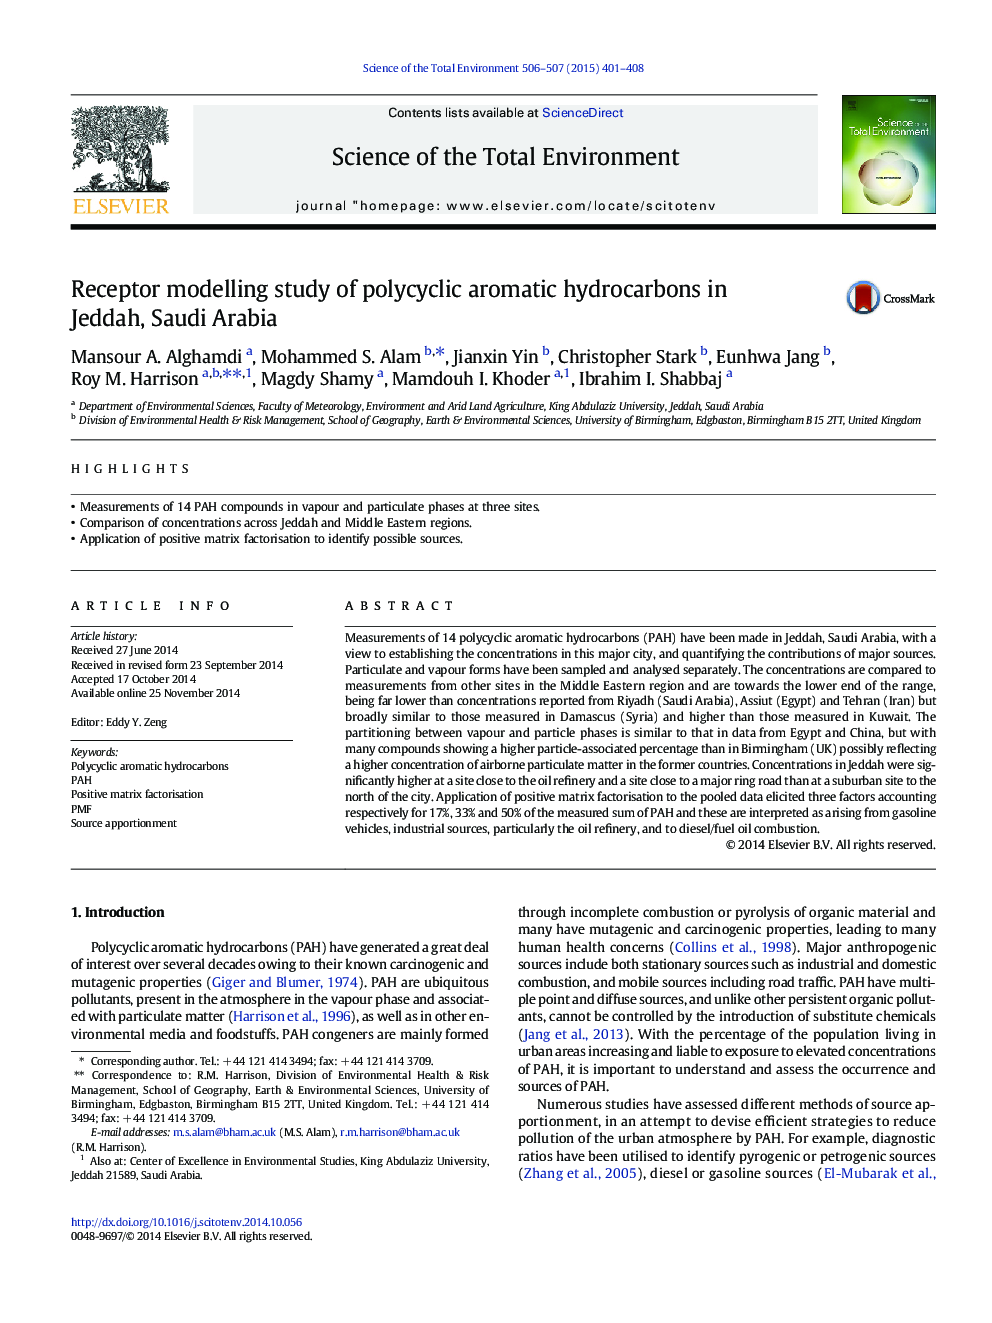 Receptor modelling study of polycyclic aromatic hydrocarbons in Jeddah, Saudi Arabia